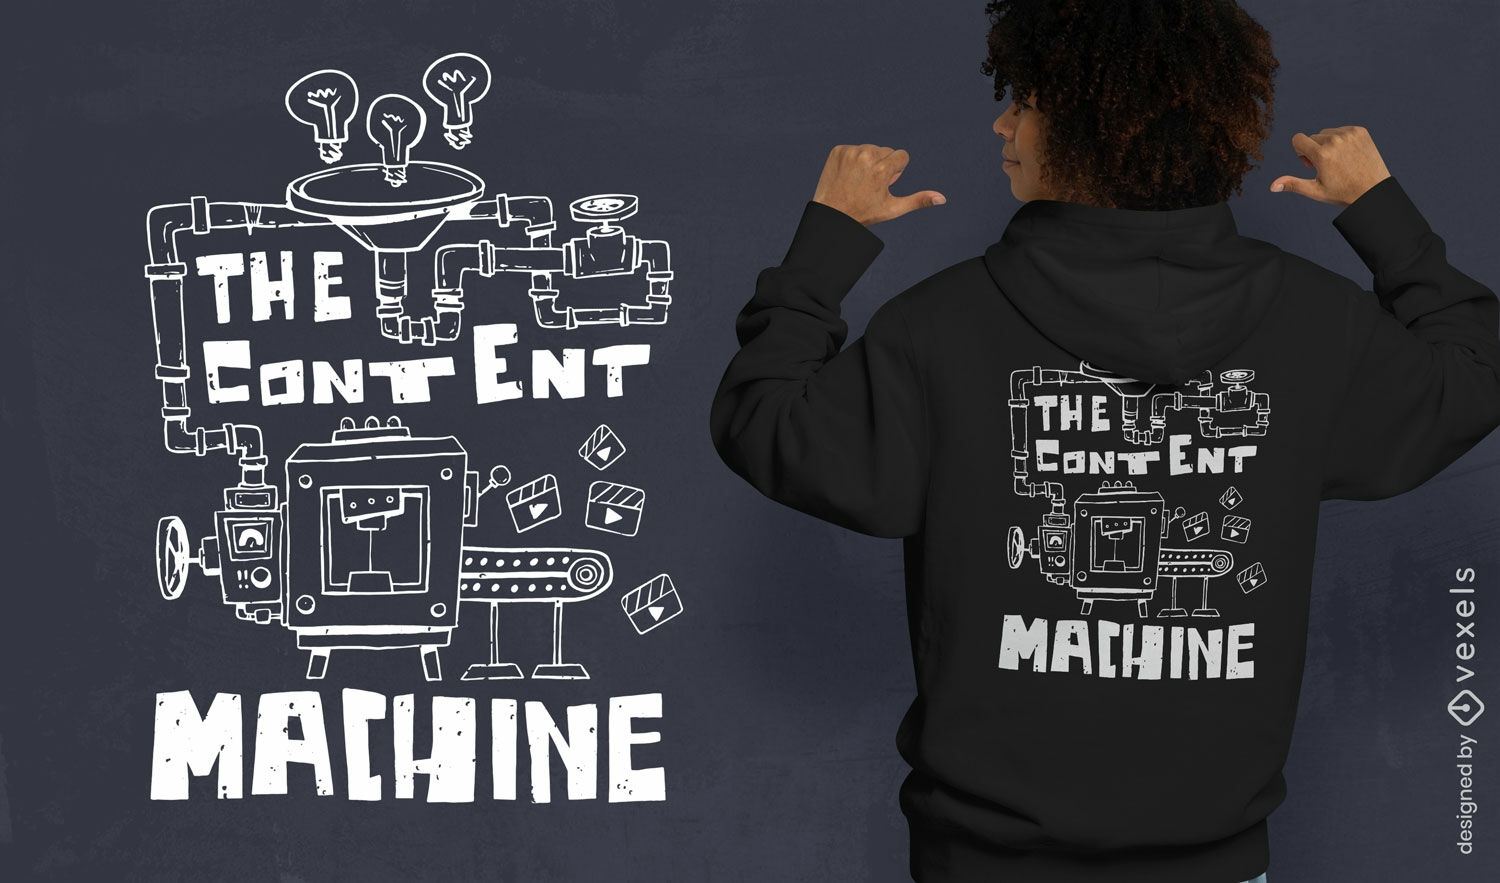  Content machine t-shirt design